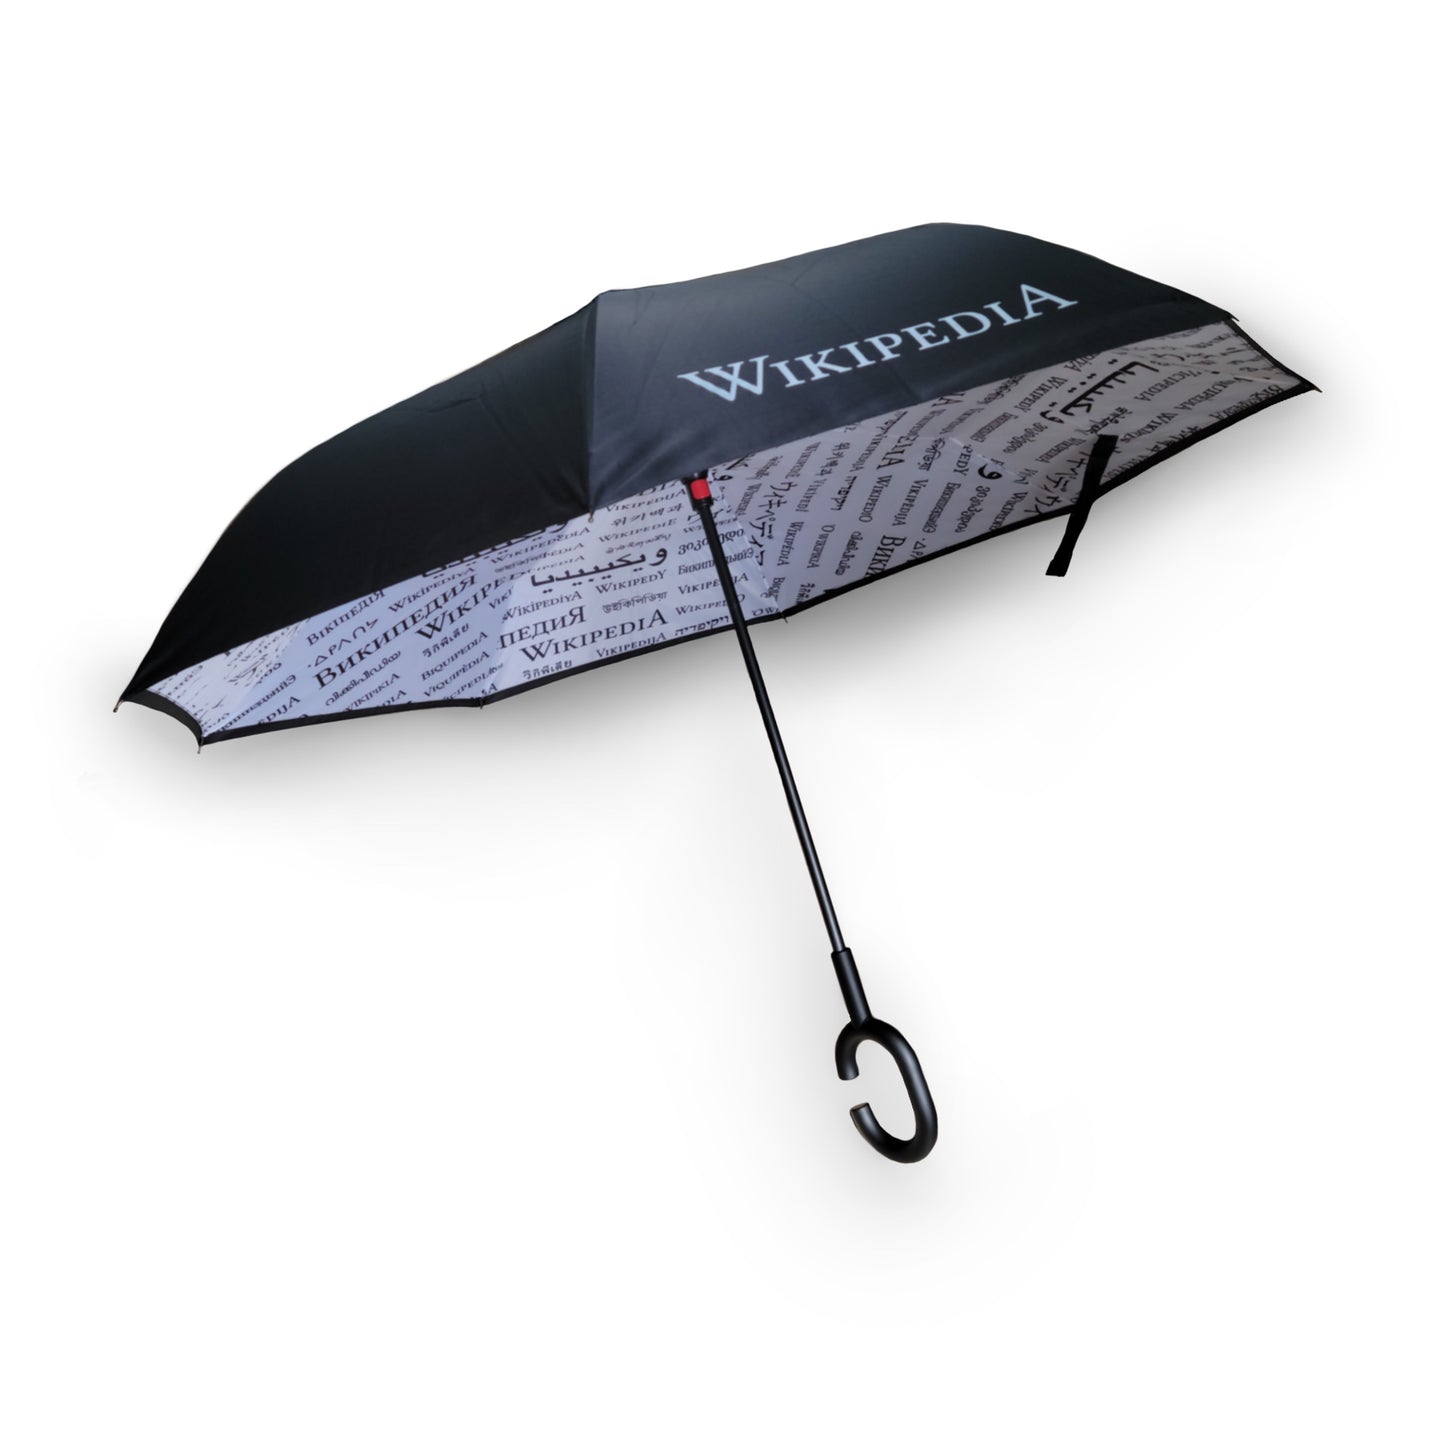 "Wikipedia" Language Umbrella